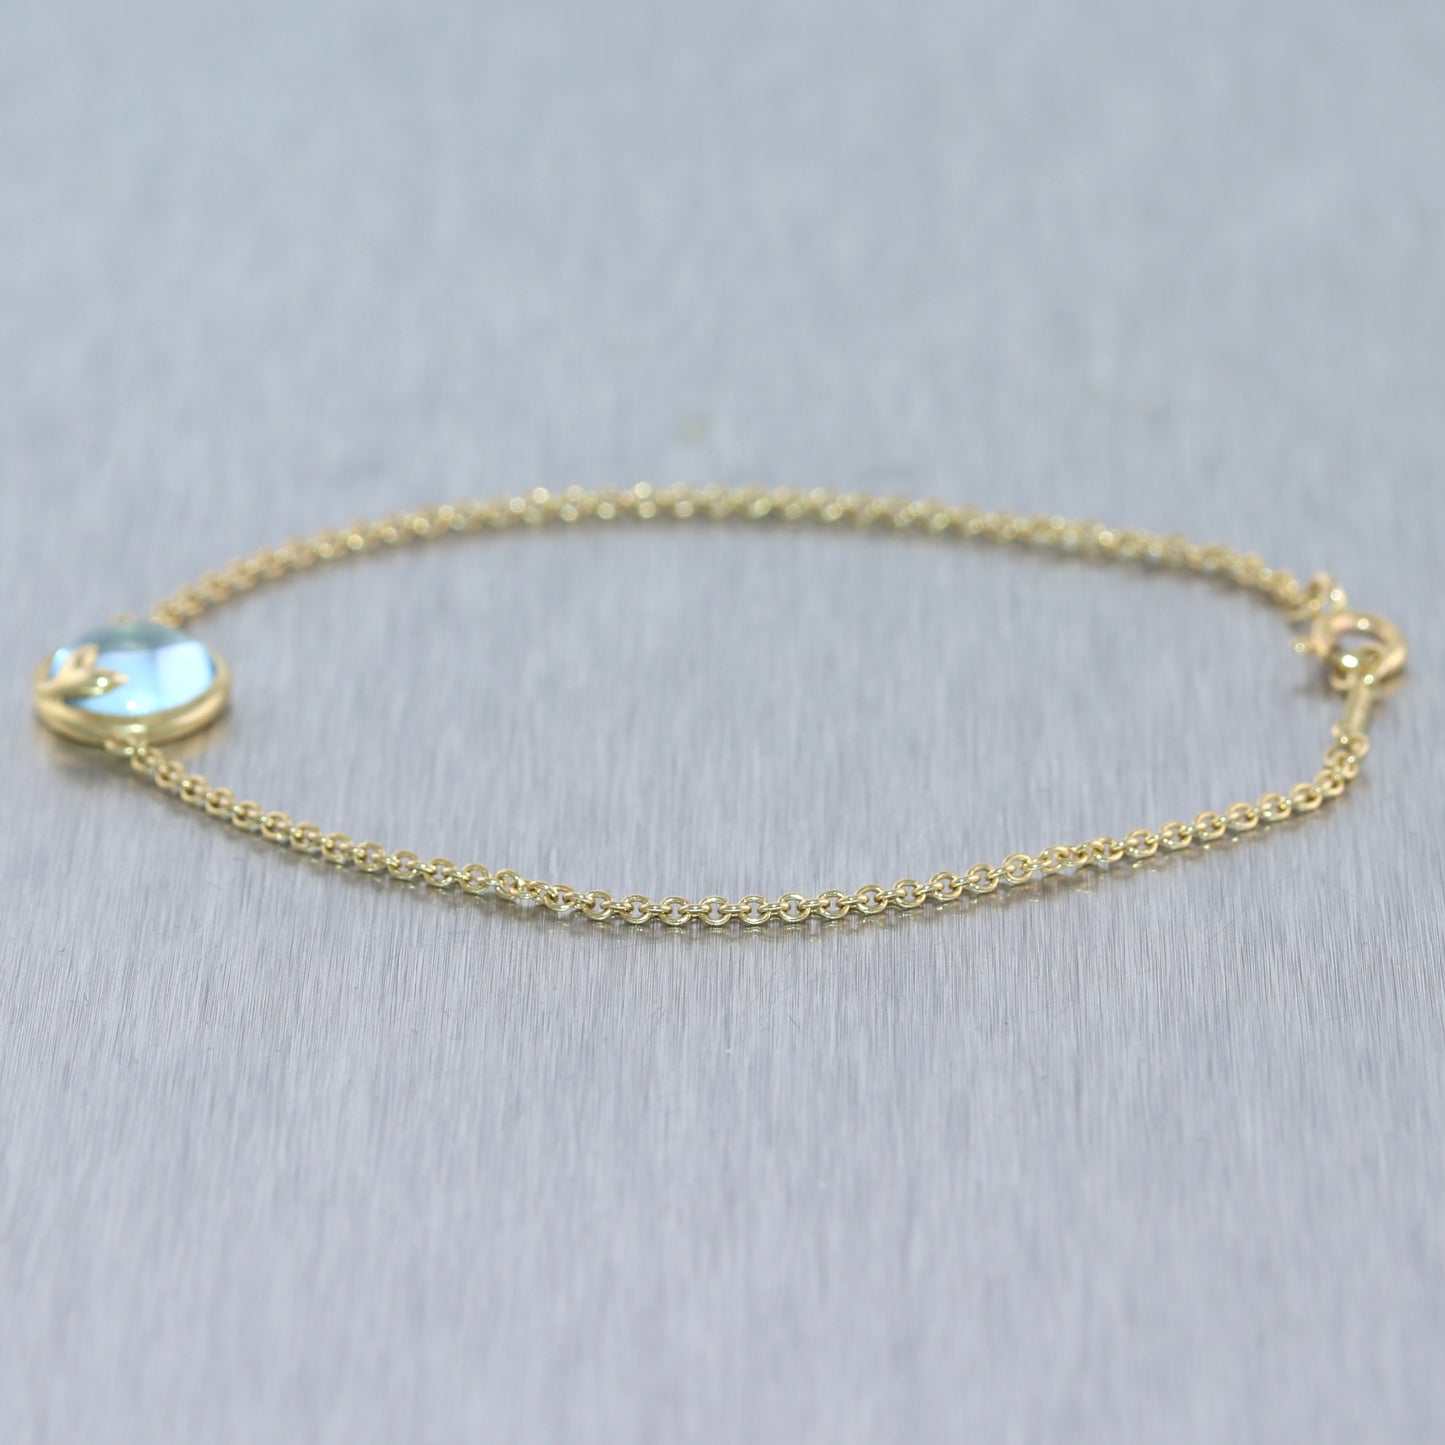 Tiffany & Co. Paloma Picasso 18k Yellow Gold Blue Topaz Olive Leaf Bracelet